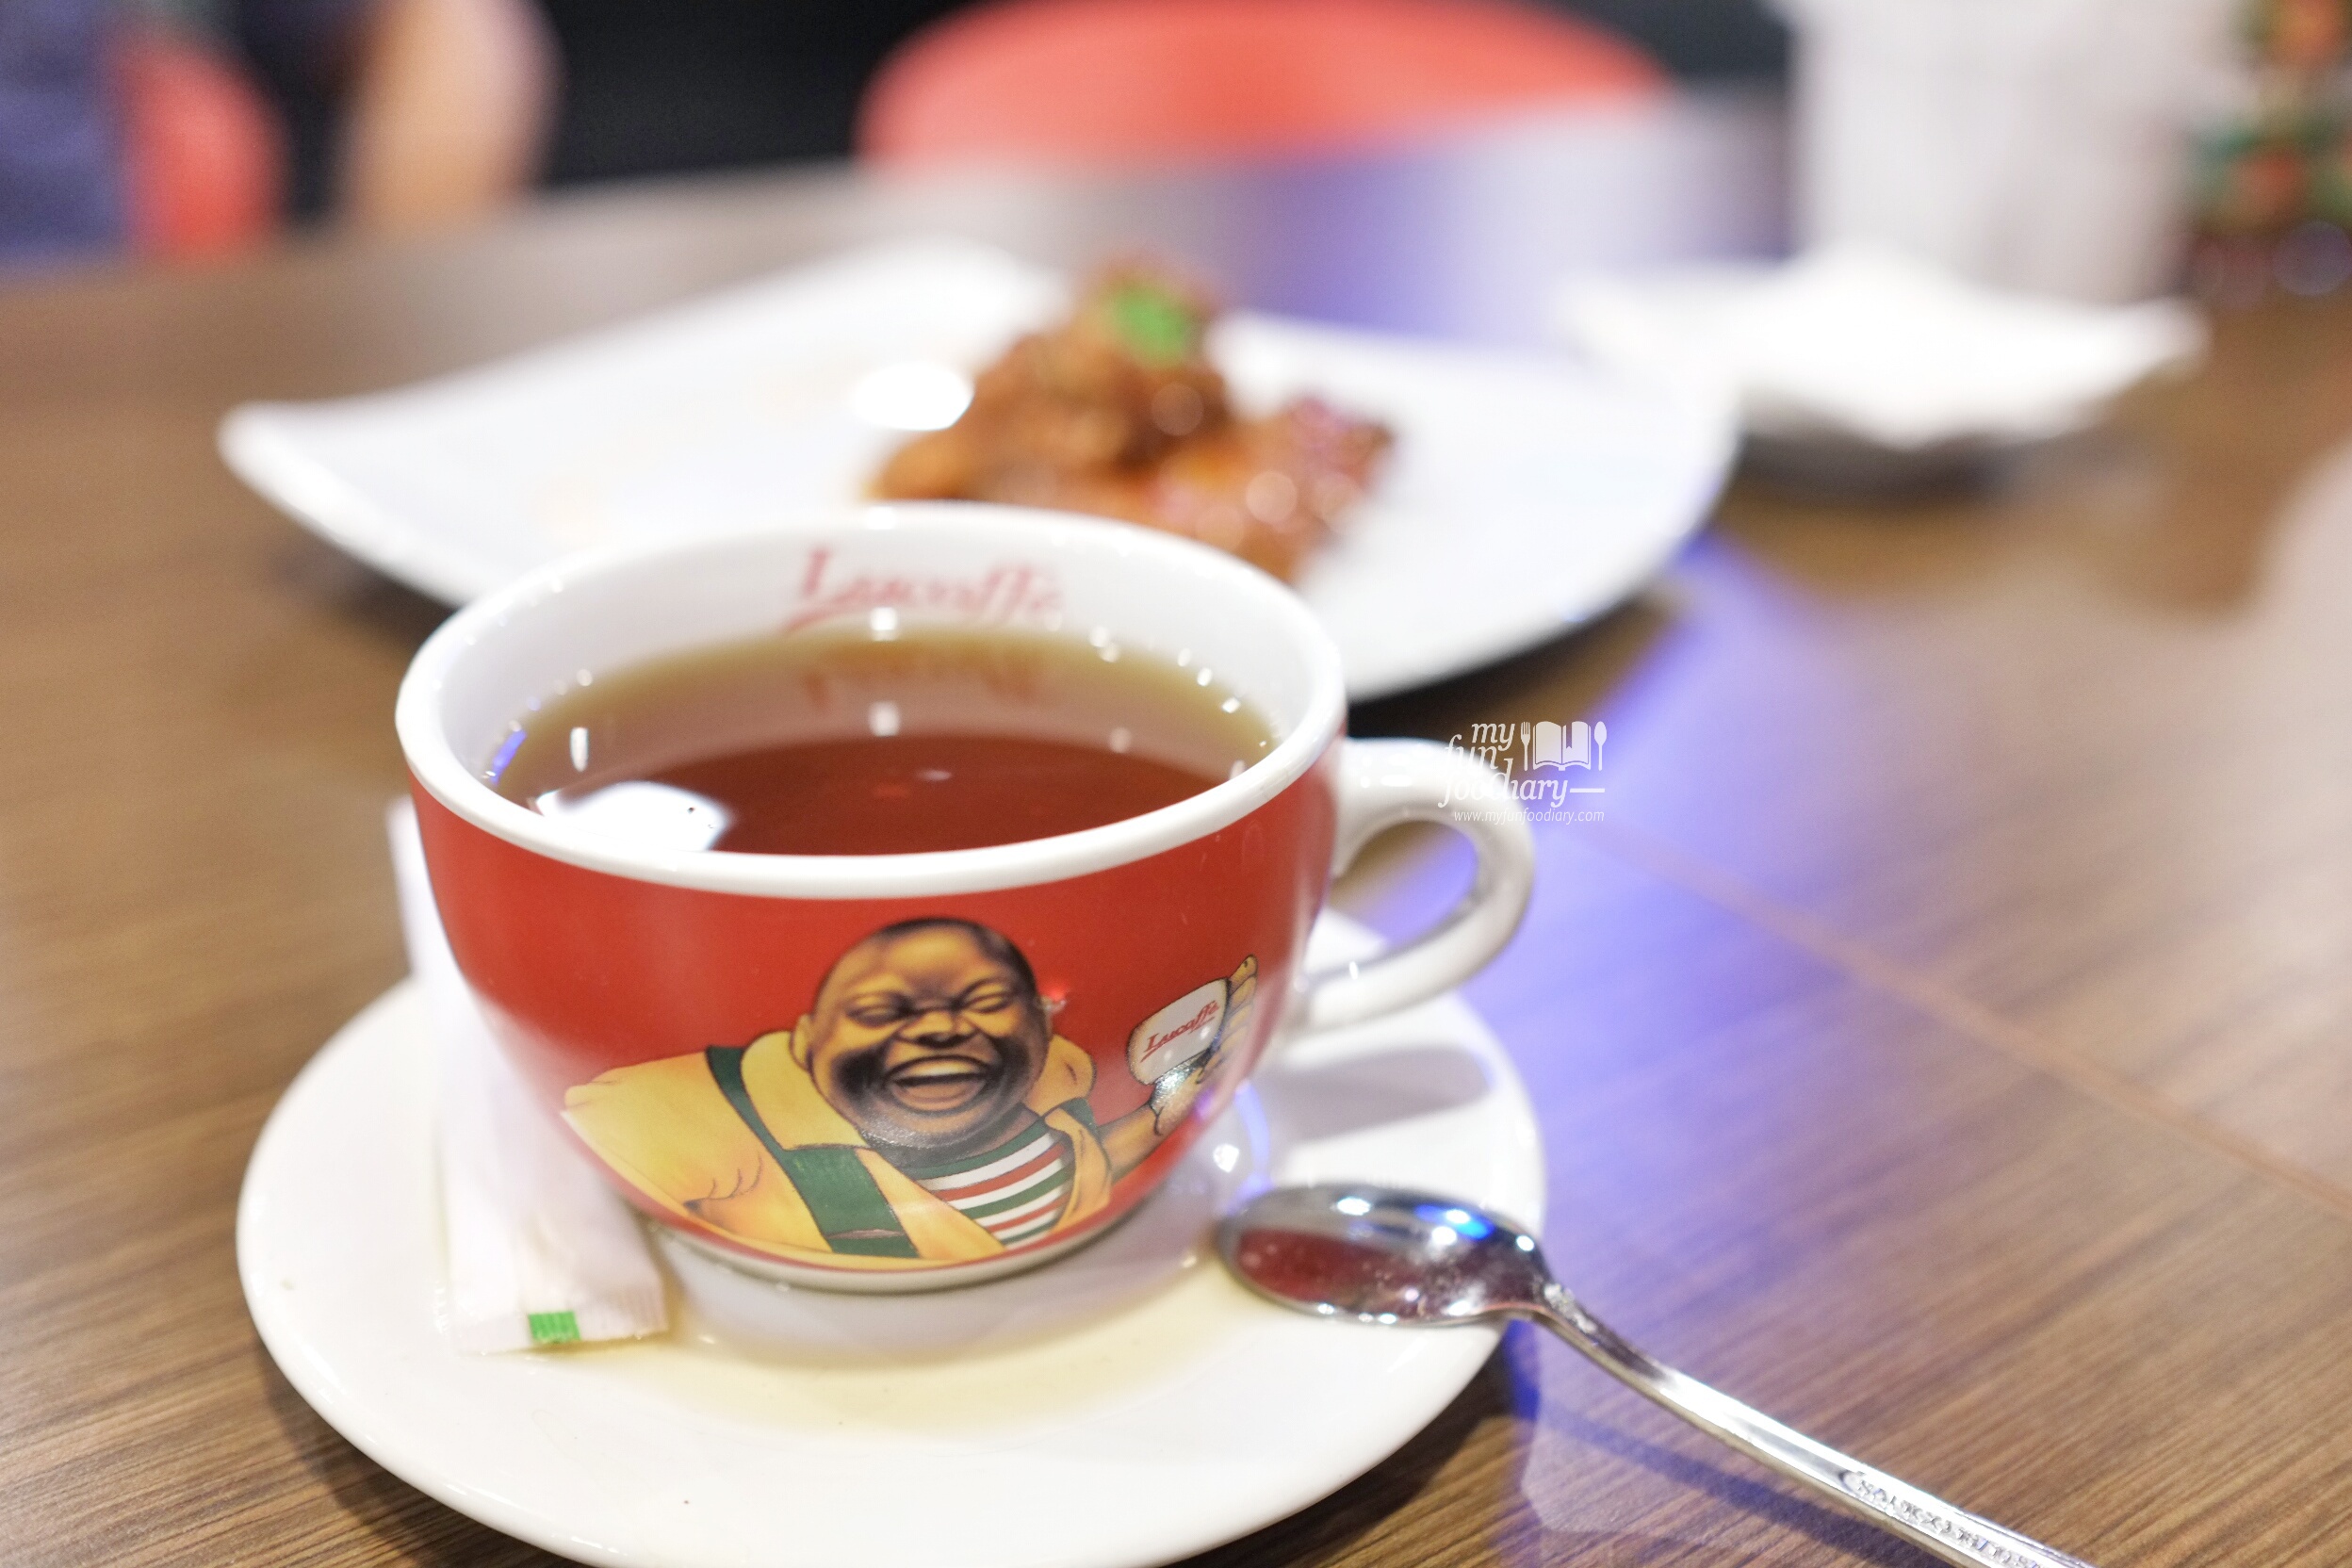 Hot Tea at OMG Meatballs by Myfunfoodiary